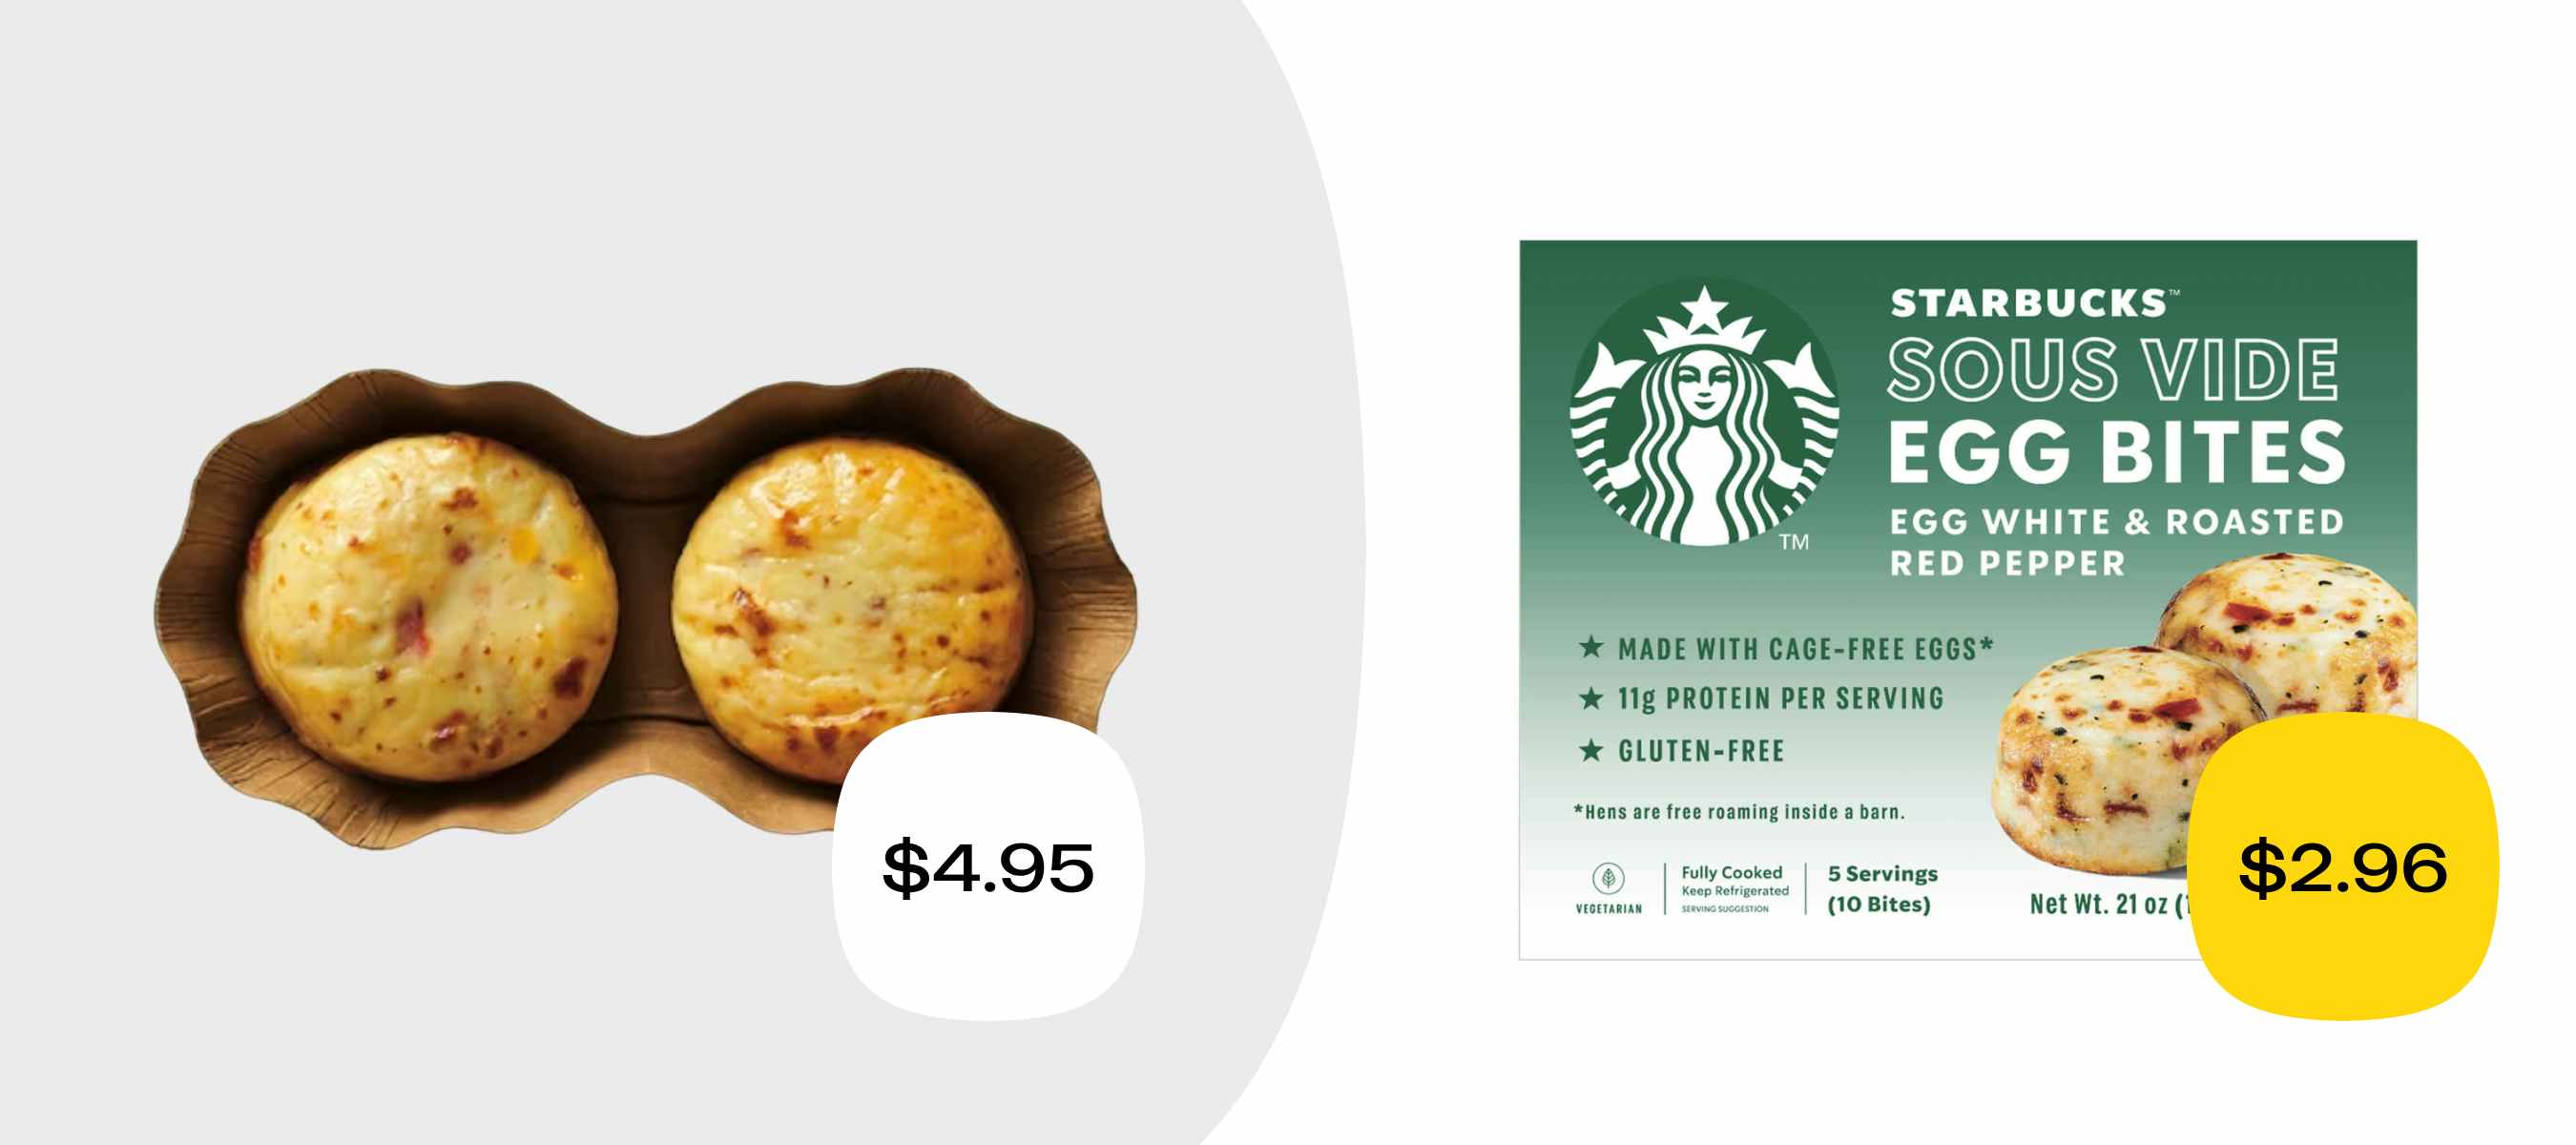 starbucks sous vide egg bites from Starbucks for $4.95 versus the same thing from Costco for $2.96